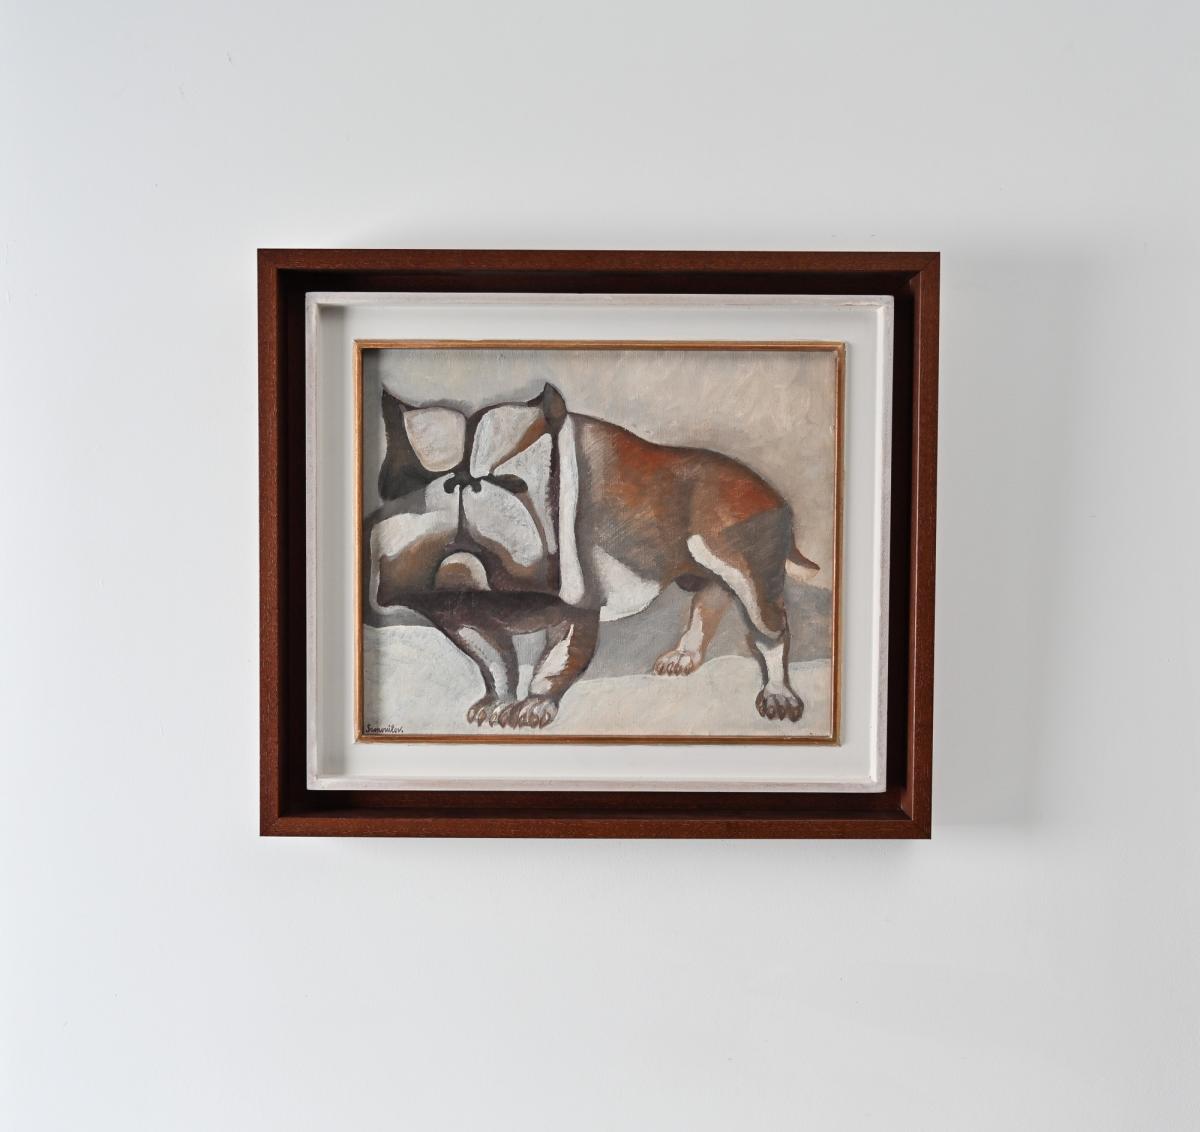 Oil on canvas of a bulldog by Henri Samouilov